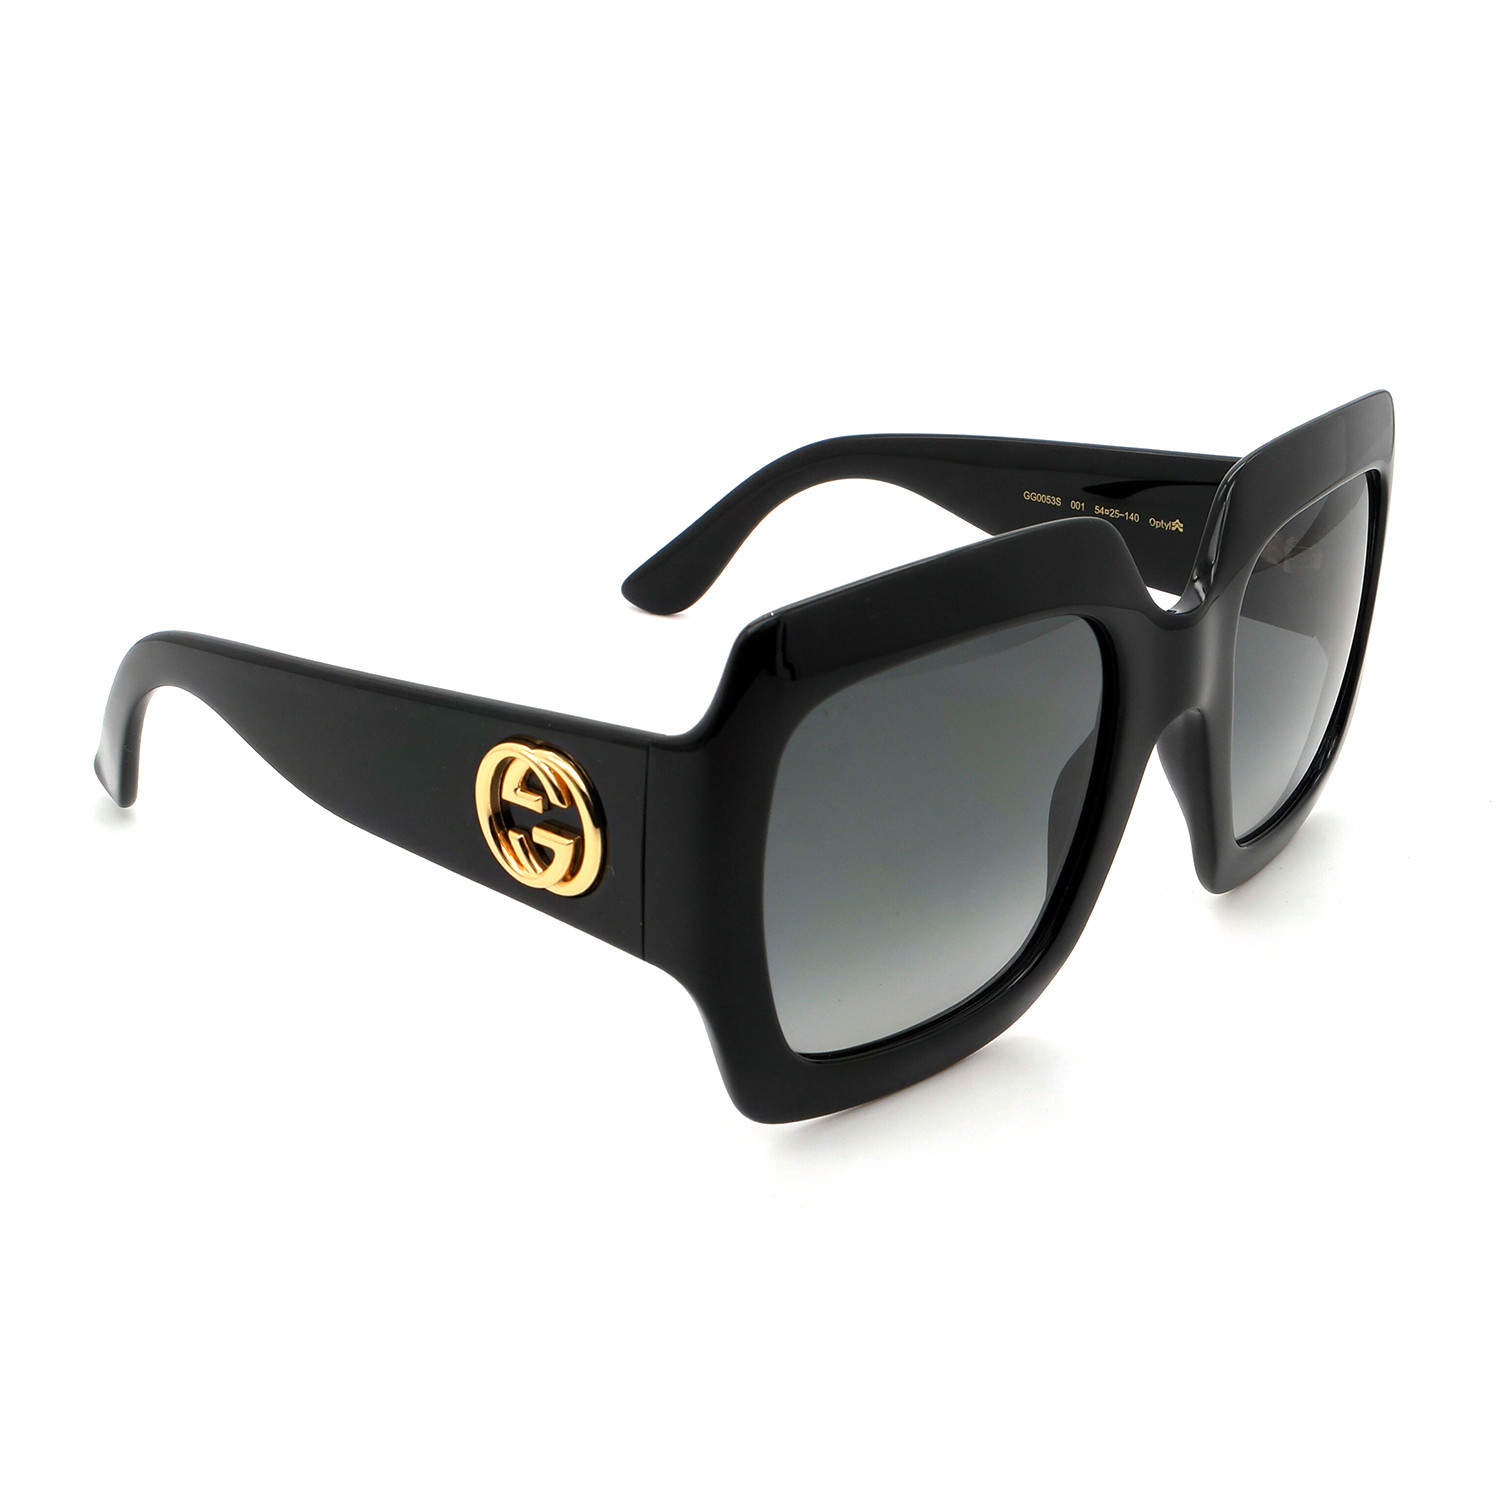 Unisex Gg0053s 001 Large Square Sunglasses Shiny Black Gray